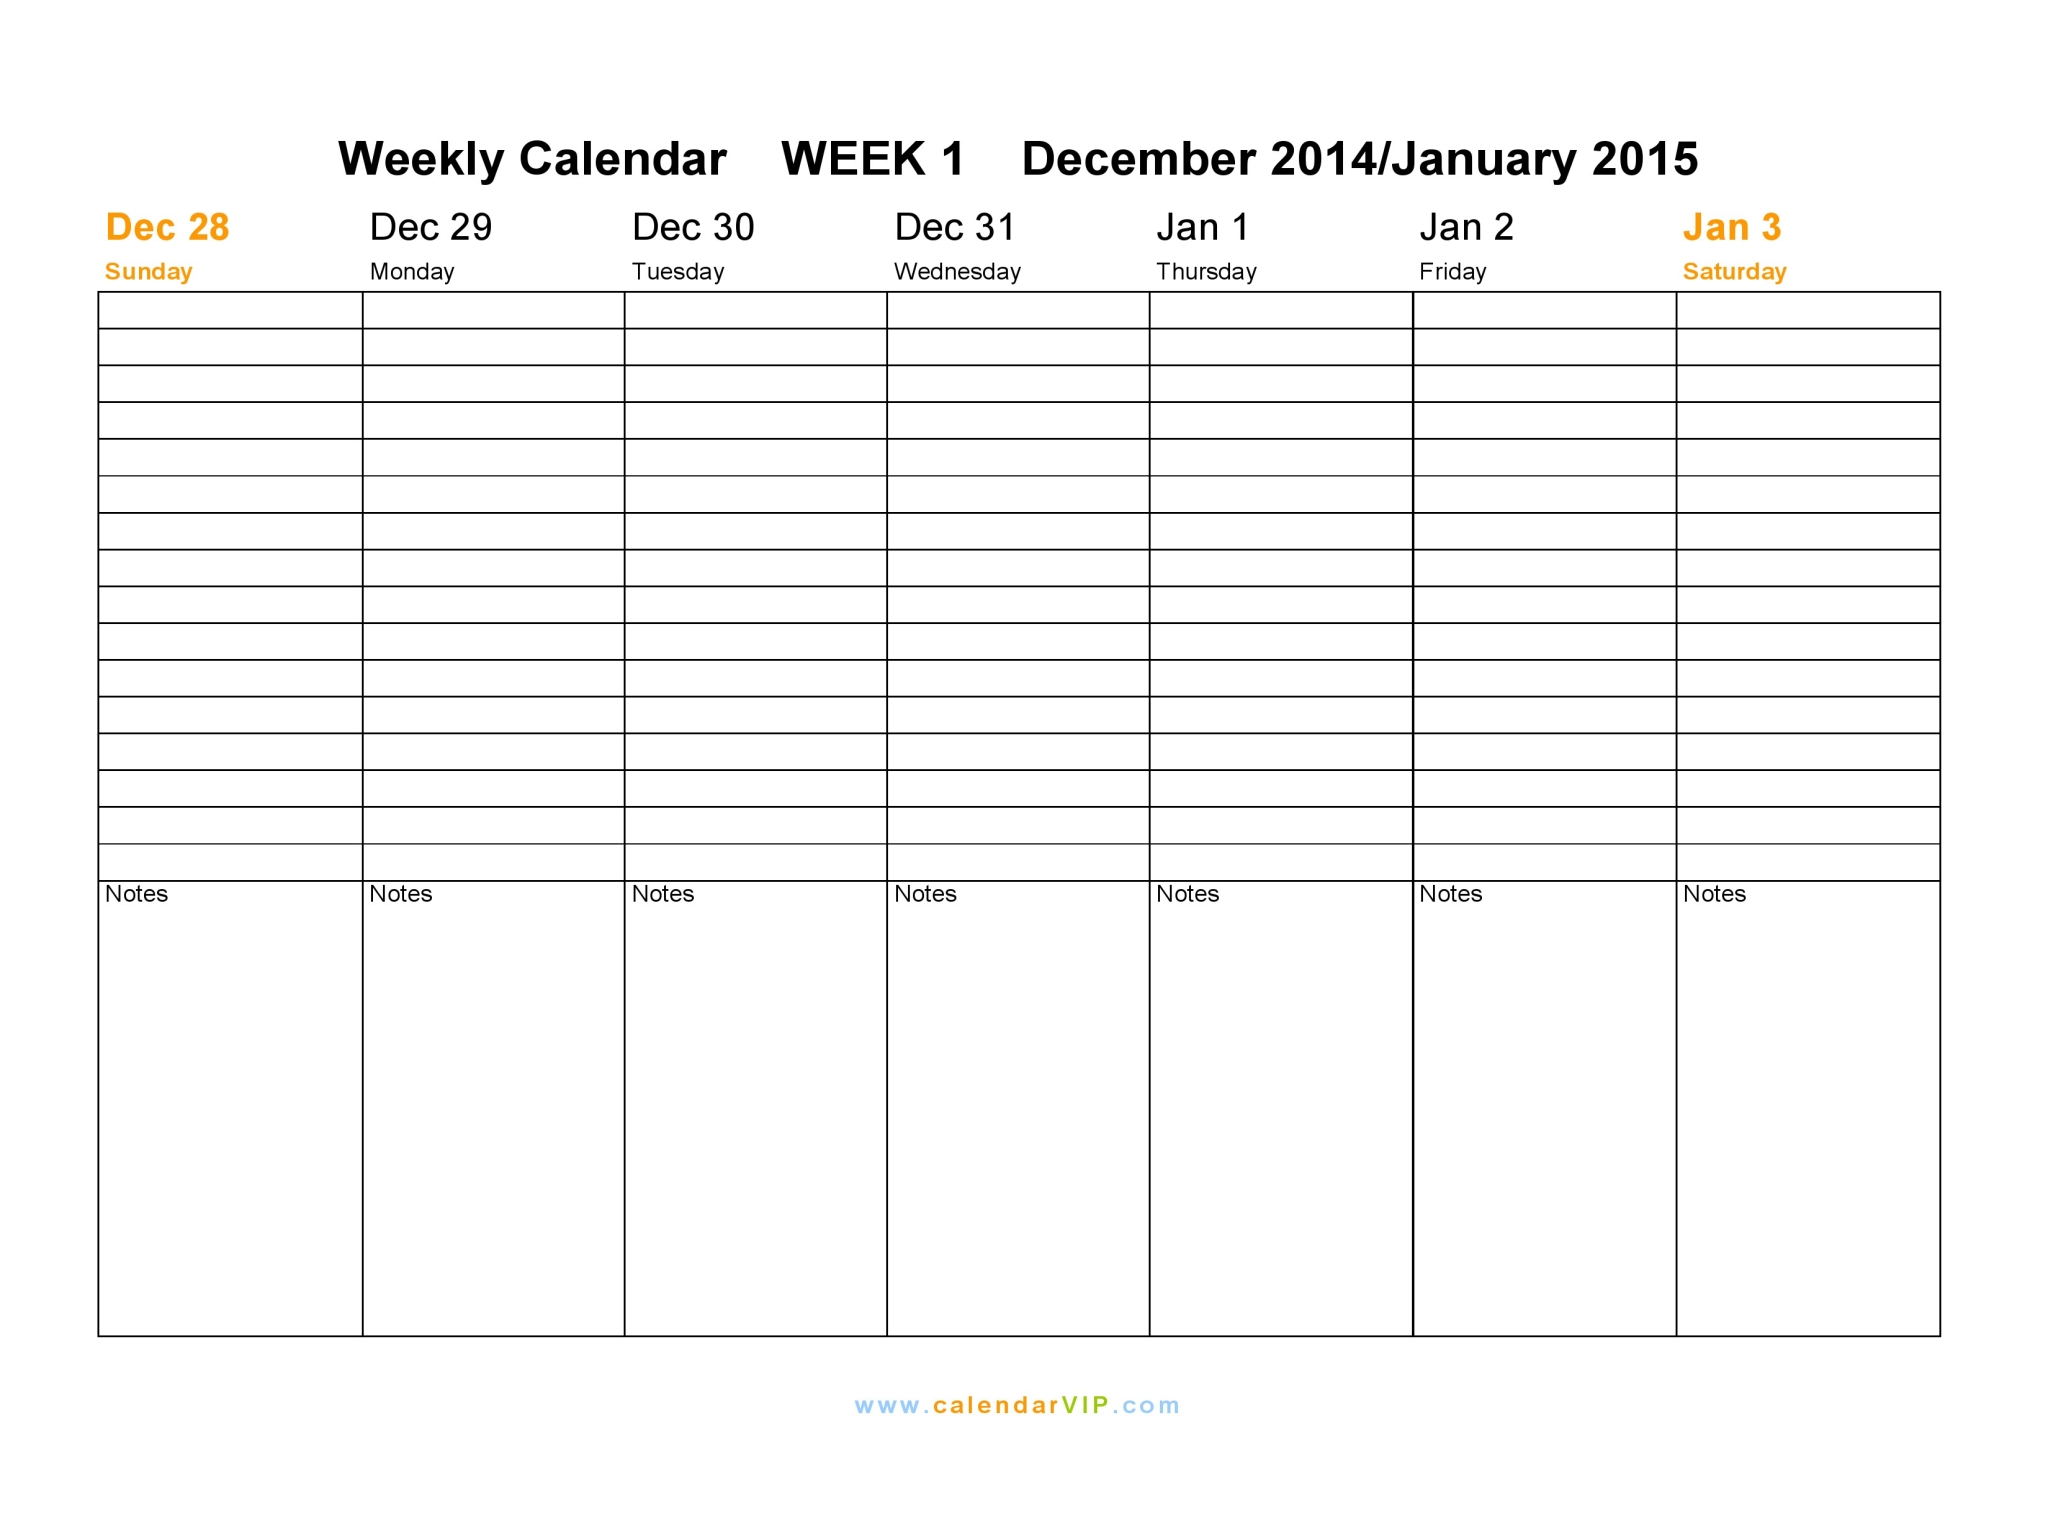 preschool-calendar-weekly-template-templates-at-allbusinesstemplates